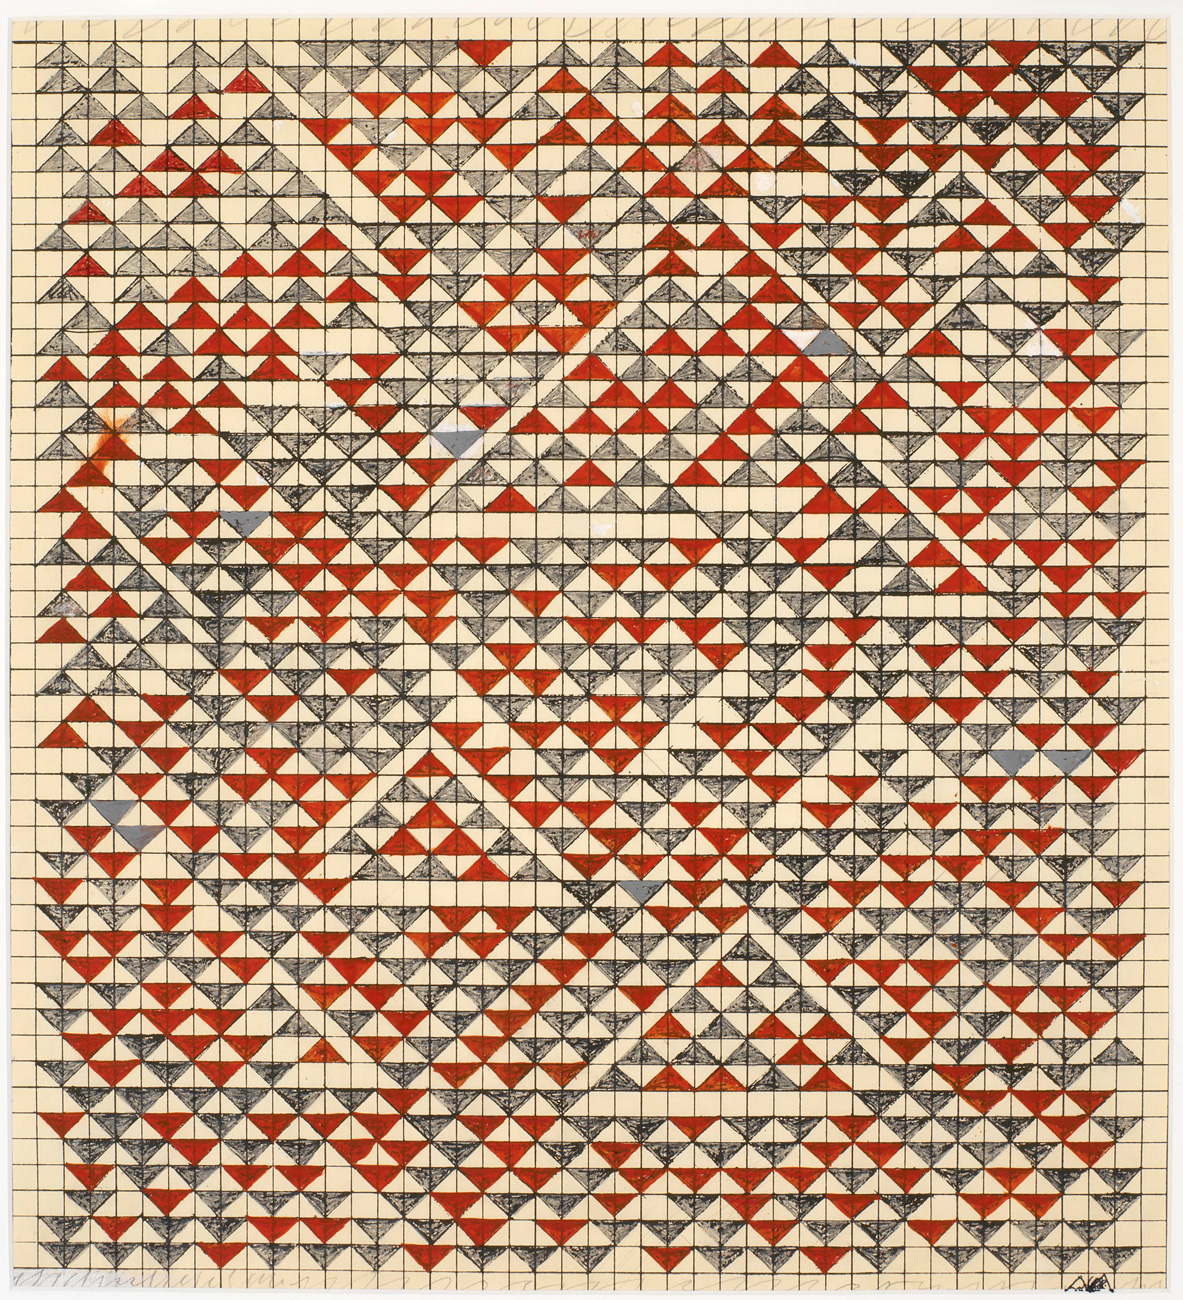 Textil de Anni Albers. Diseñadoras del siglo XX. 